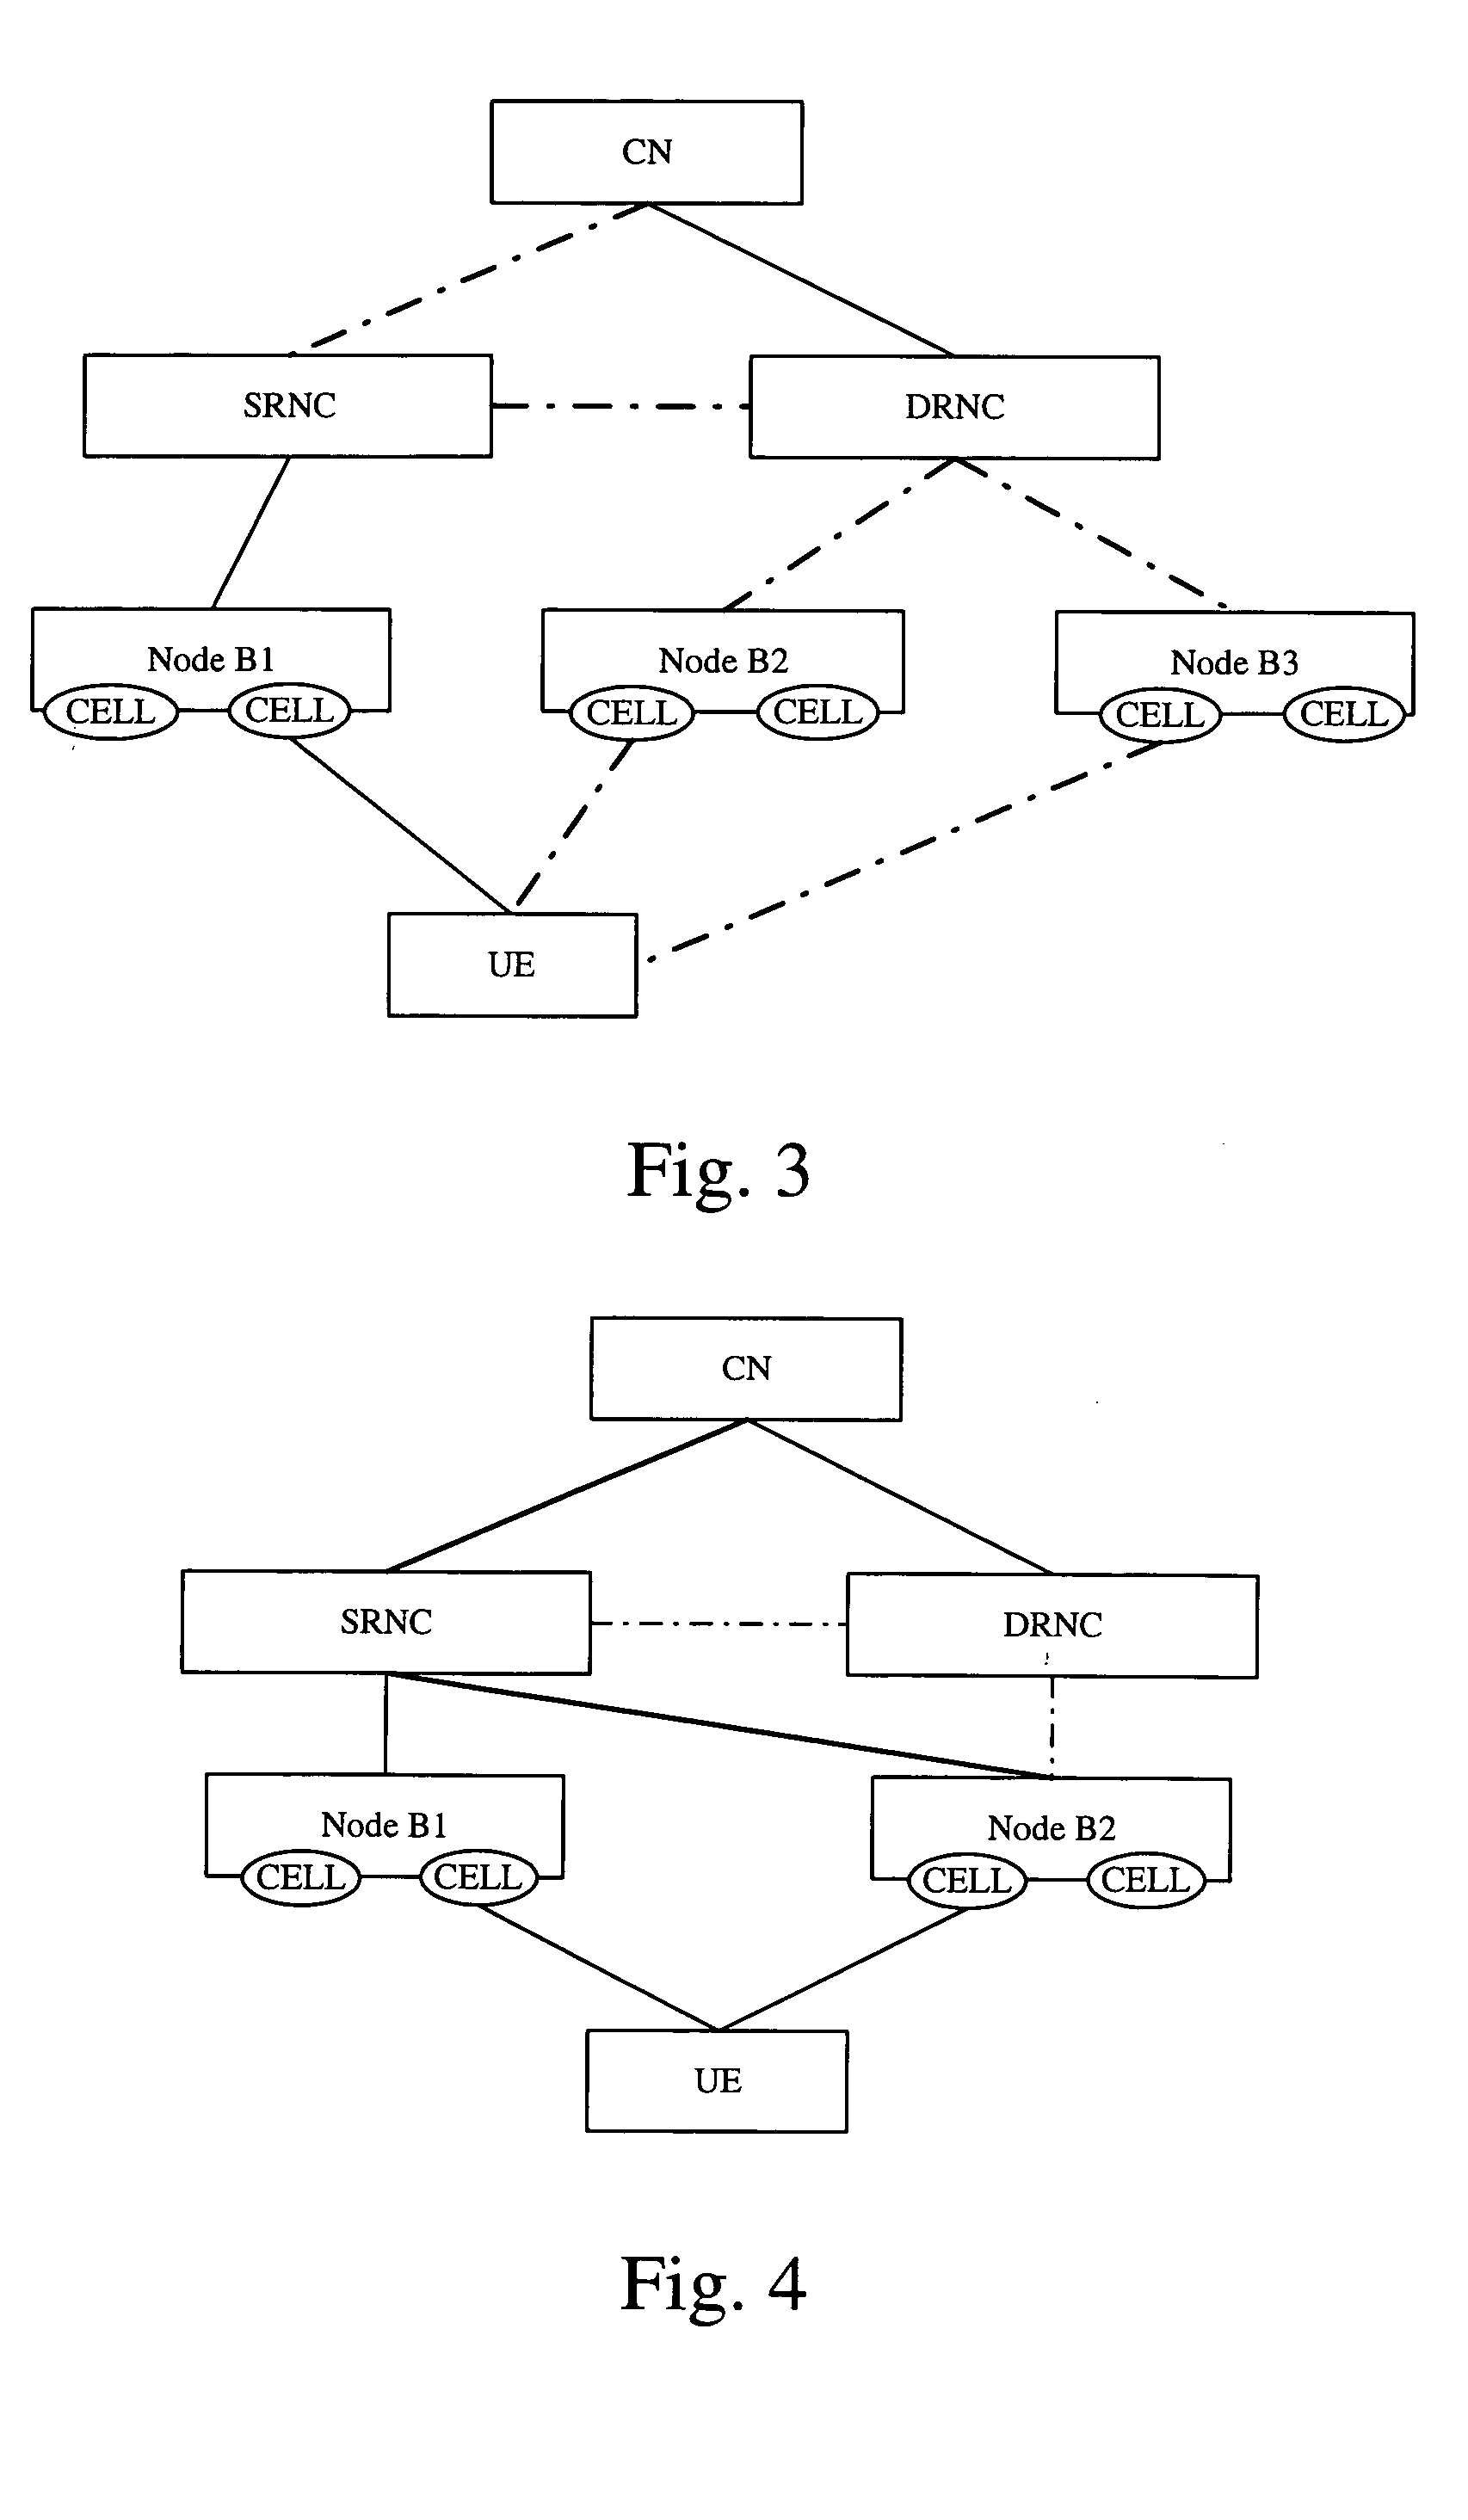 Method of optimizing soft handover between radio network controllers